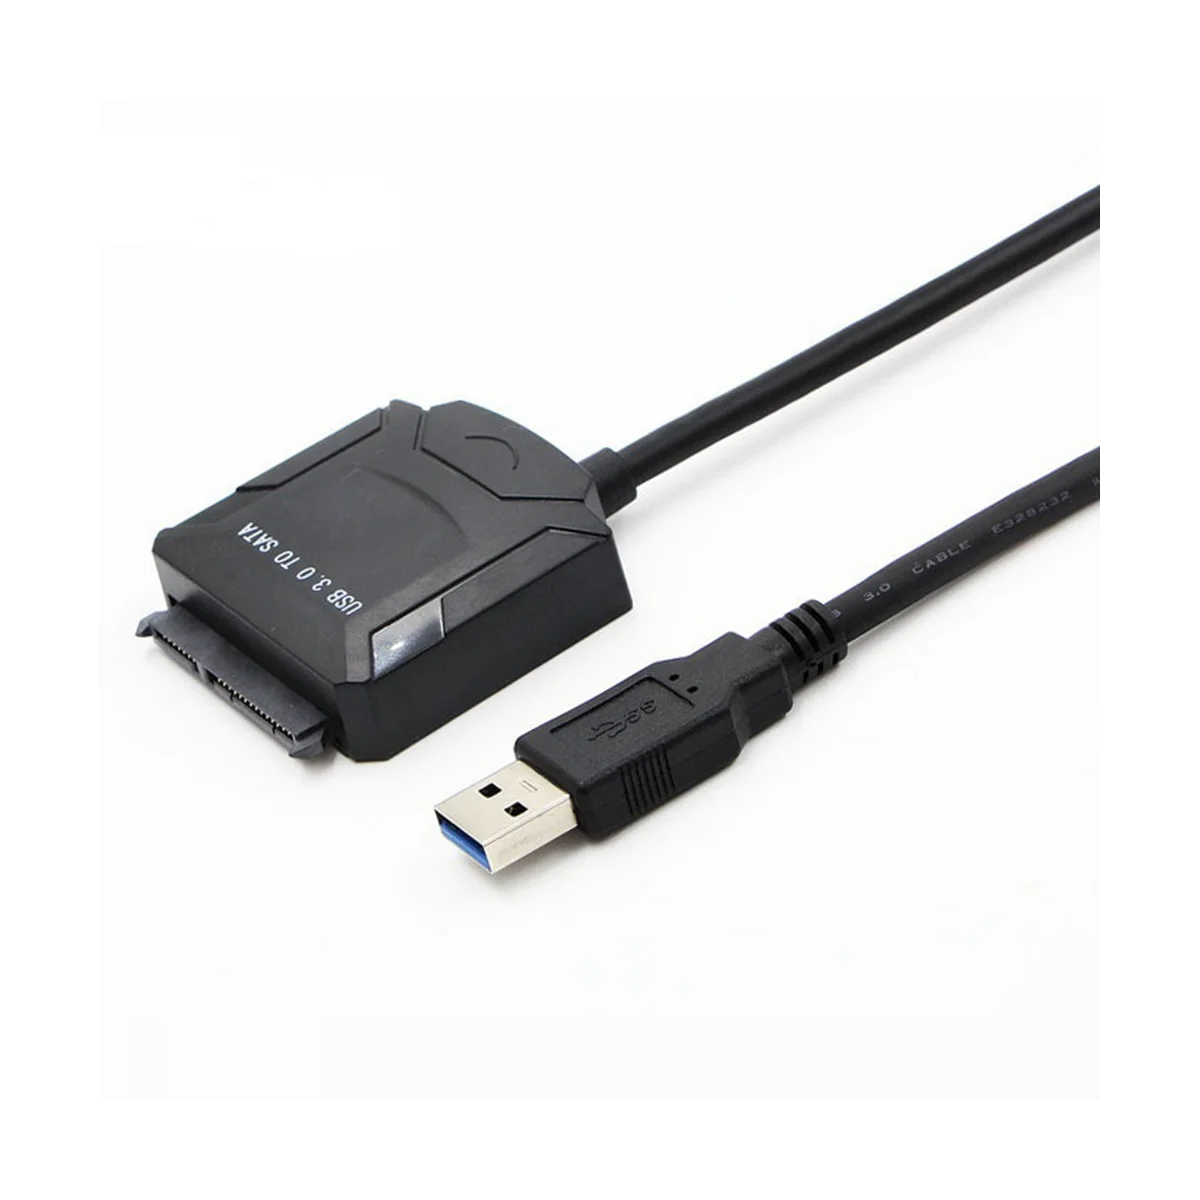 

Кабель-адаптер Sata с USB 3,0 на Sata, конвертер 2,5/3,5 дюйма, жесткий диск для HDD SSD, кабель USB на Sata, вилка стандарта США